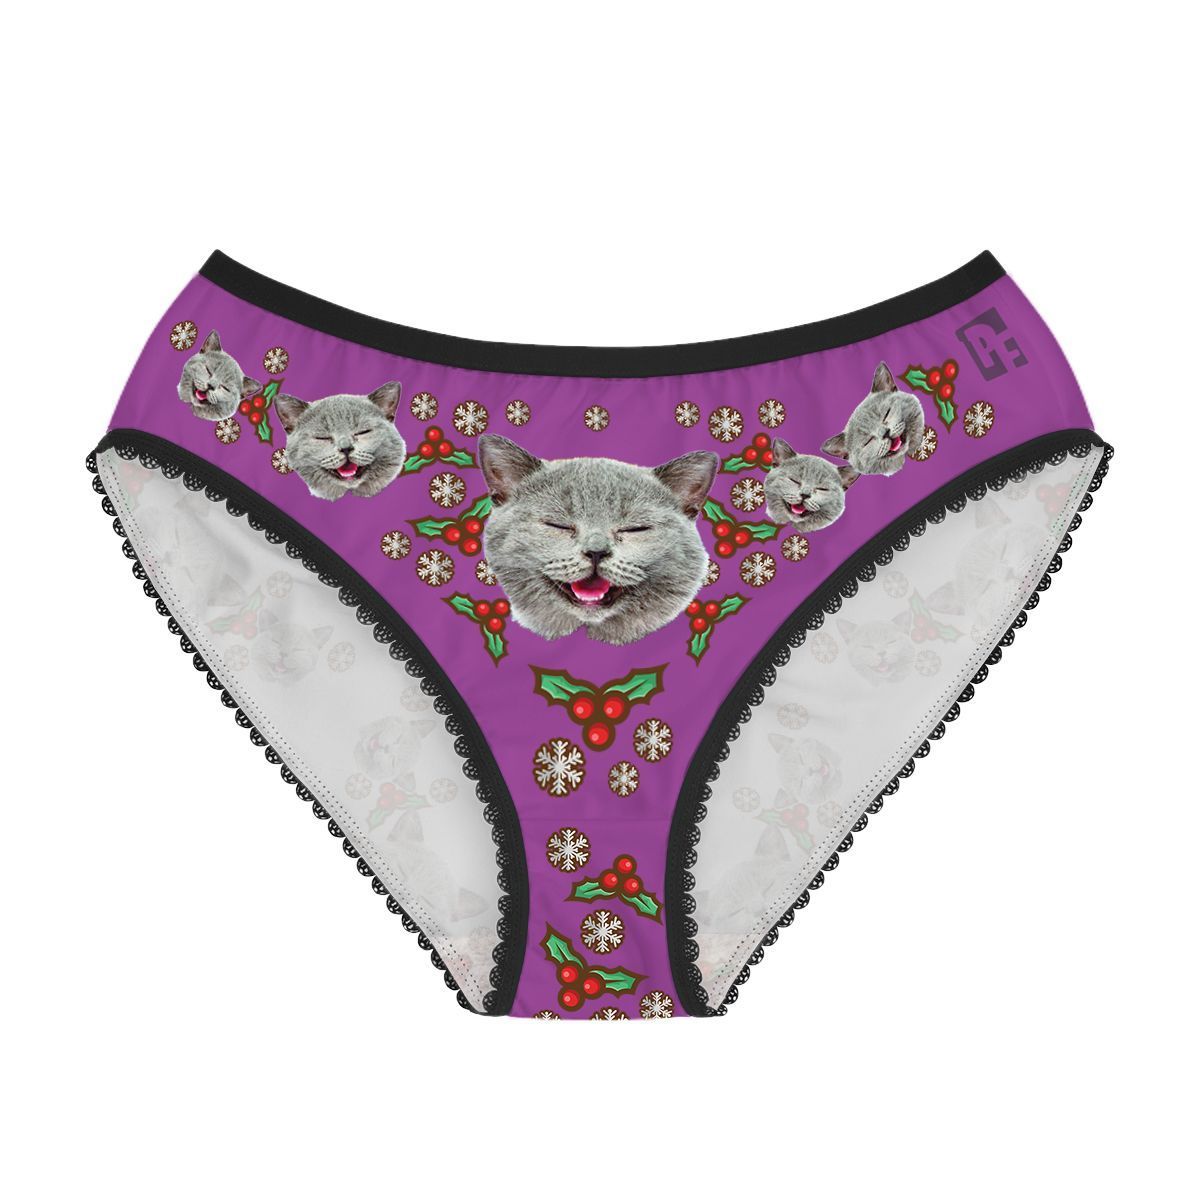 Purple Mistletoe women's underwear briefs personalized with photo printed on them